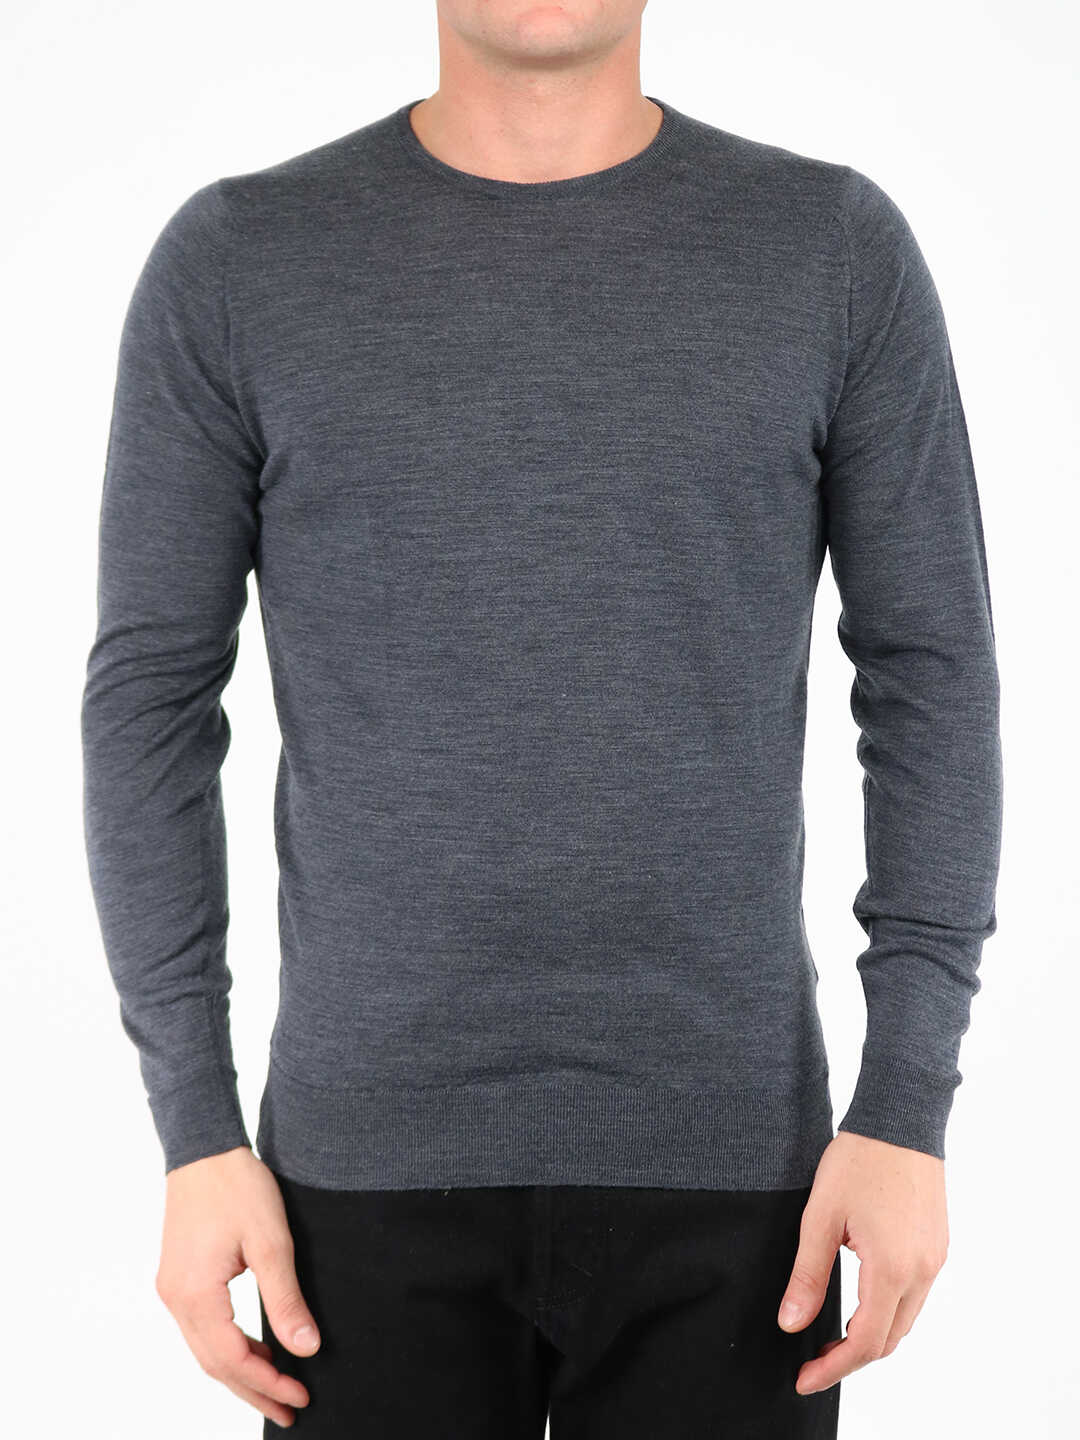 John Smedley Gray Merino Wool Sweater LUNDY Grey